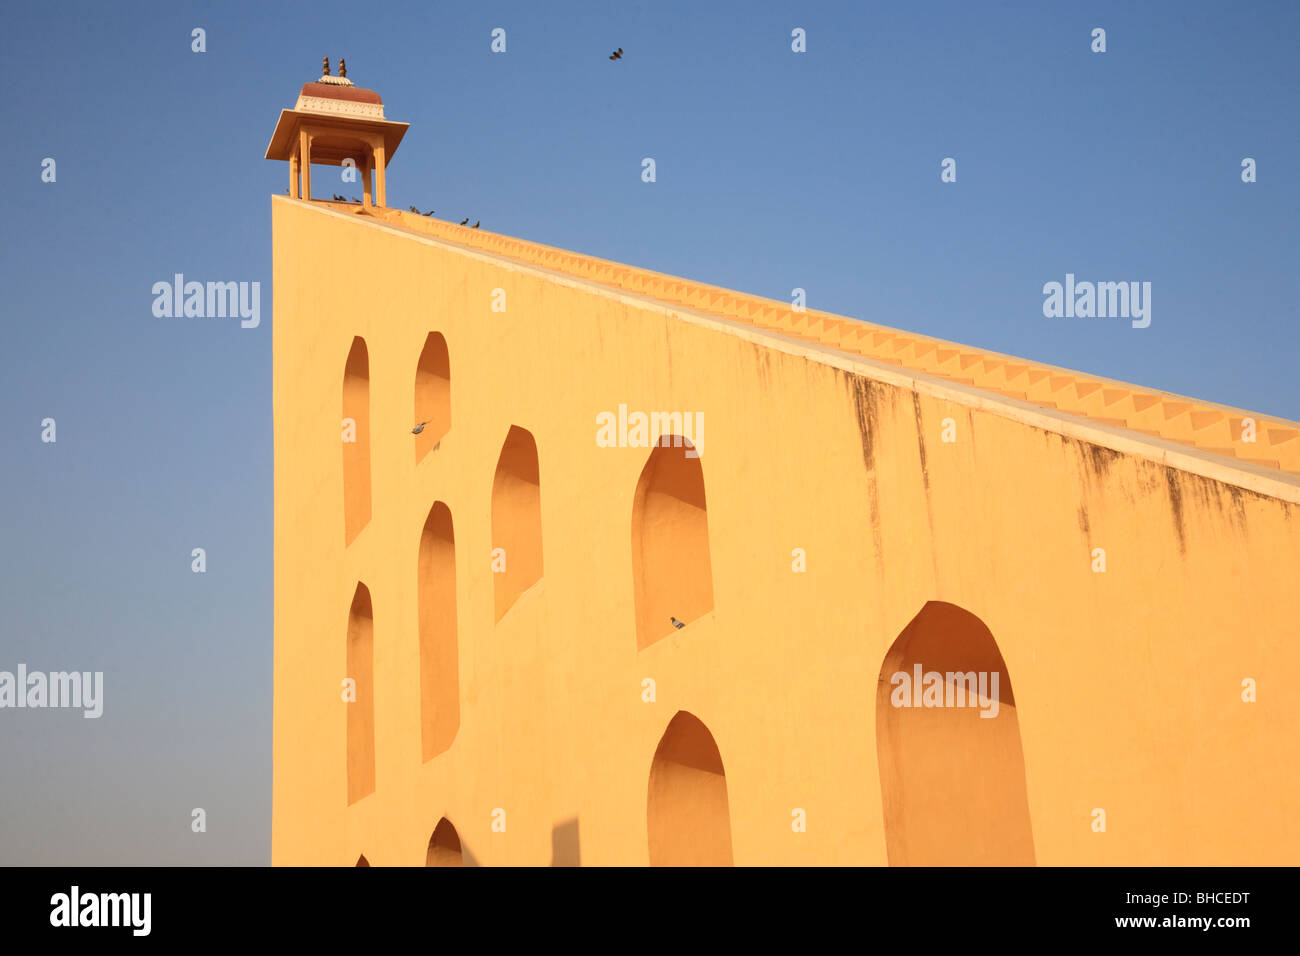 A 'Time of Day' measurement instrument at Jantar Mantar, Jaipur, India Stock Photo